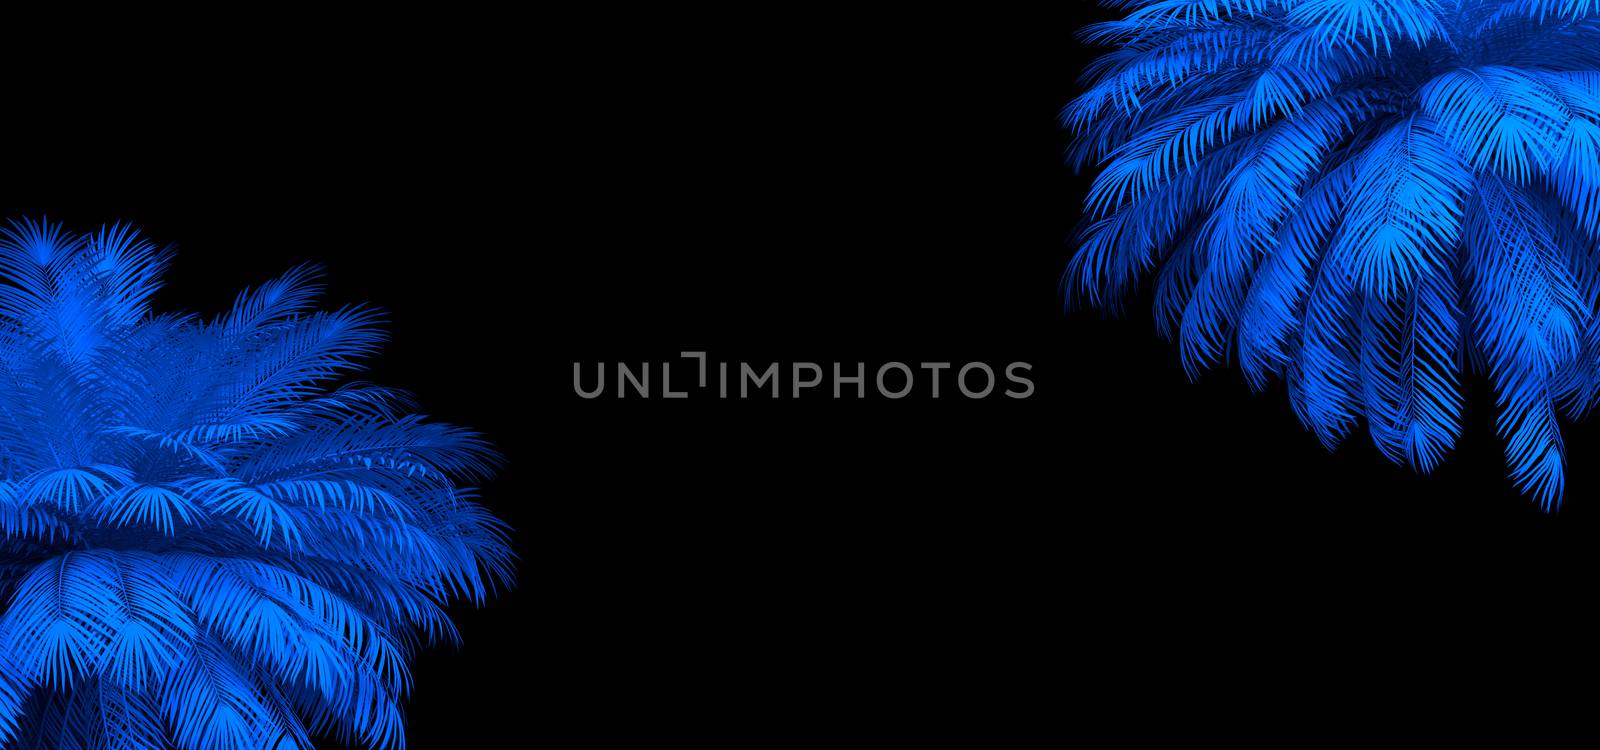 3d render of neon palm leaves on the black. Banner design. Retrowave, synthwave, vaporwave illustration. Party and sales concept